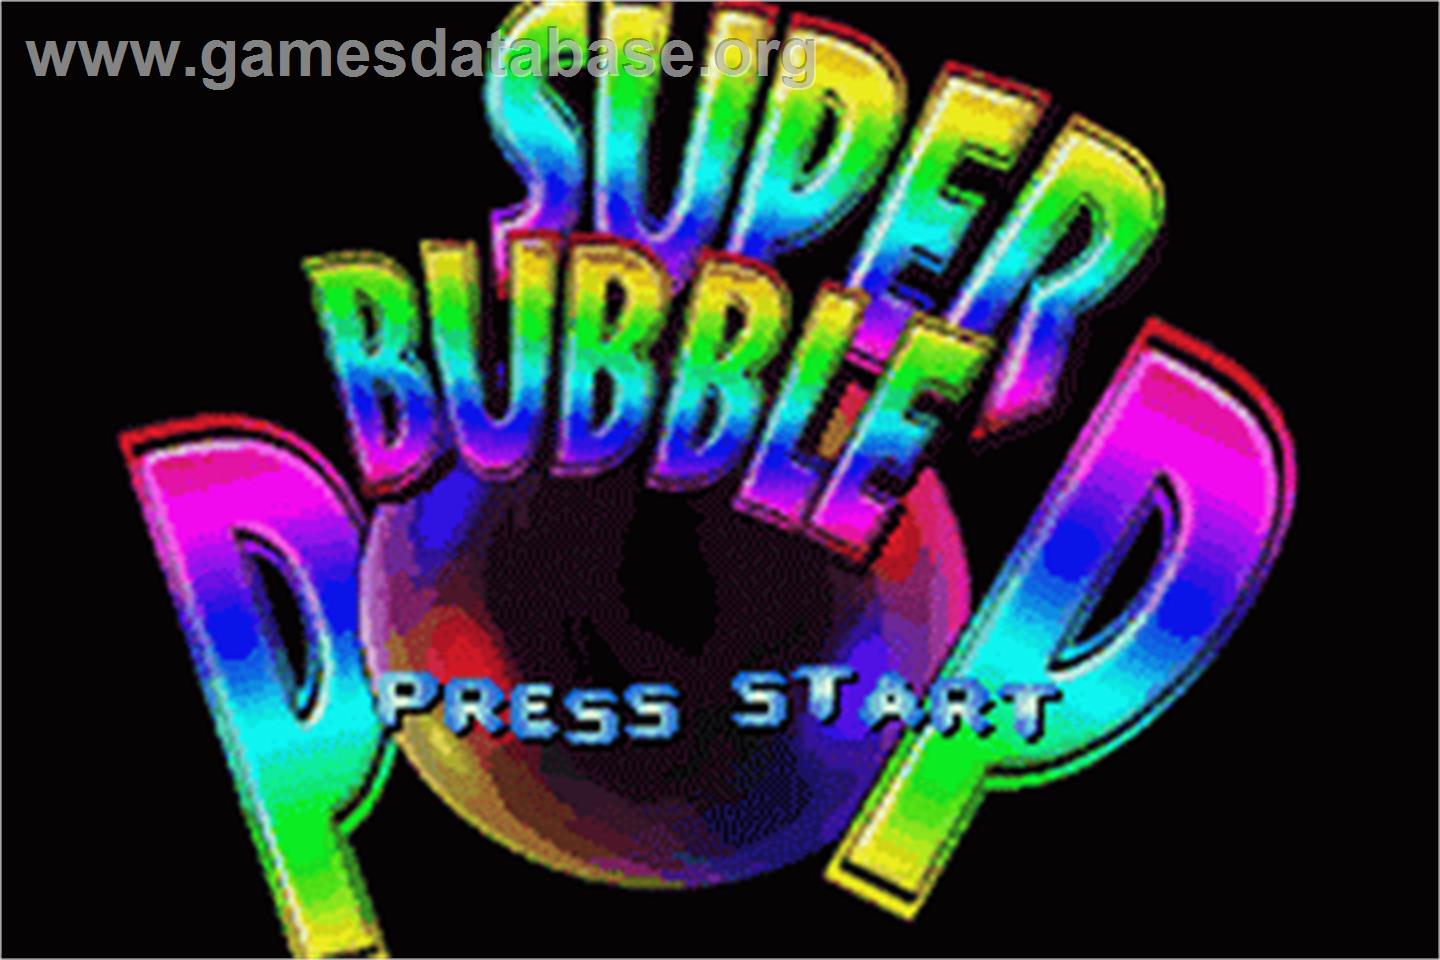 Super Bubble Pop - Nintendo Game Boy Advance - Artwork - Title Screen